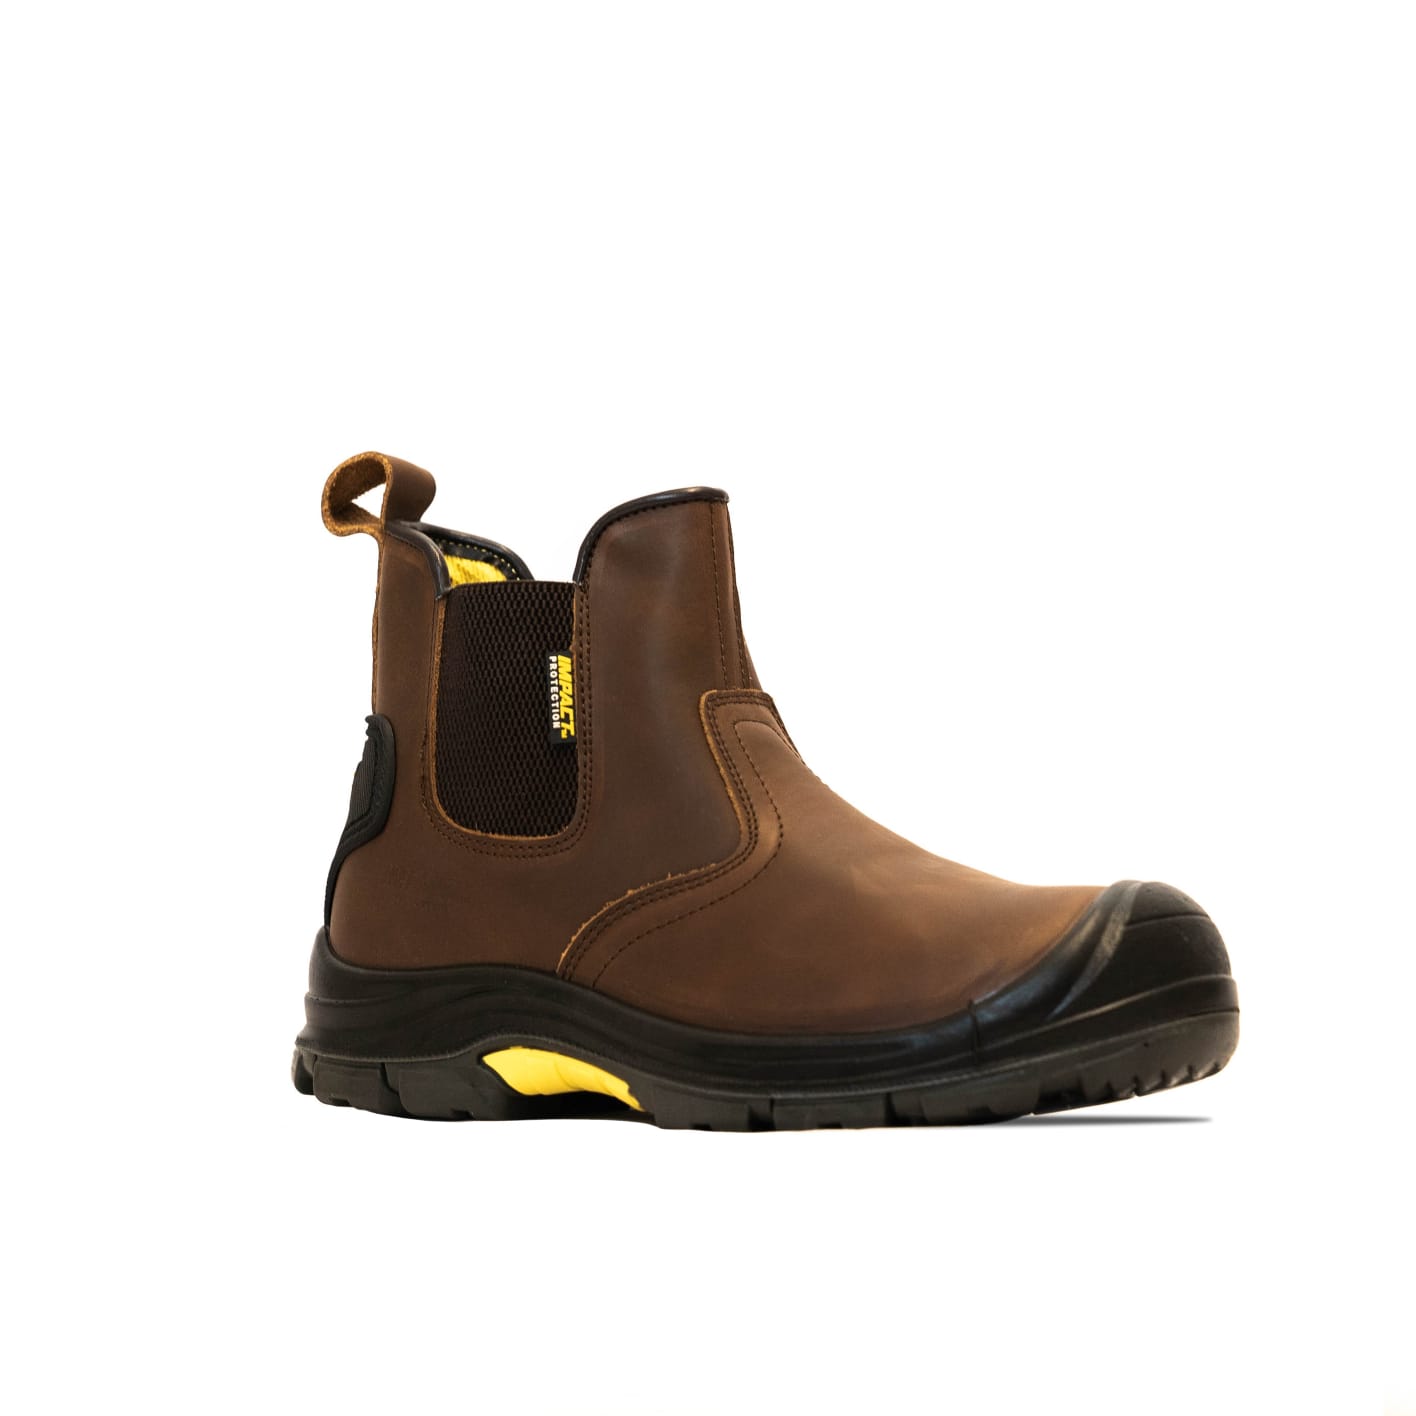 Buy > slip on work boots ireland > in stock